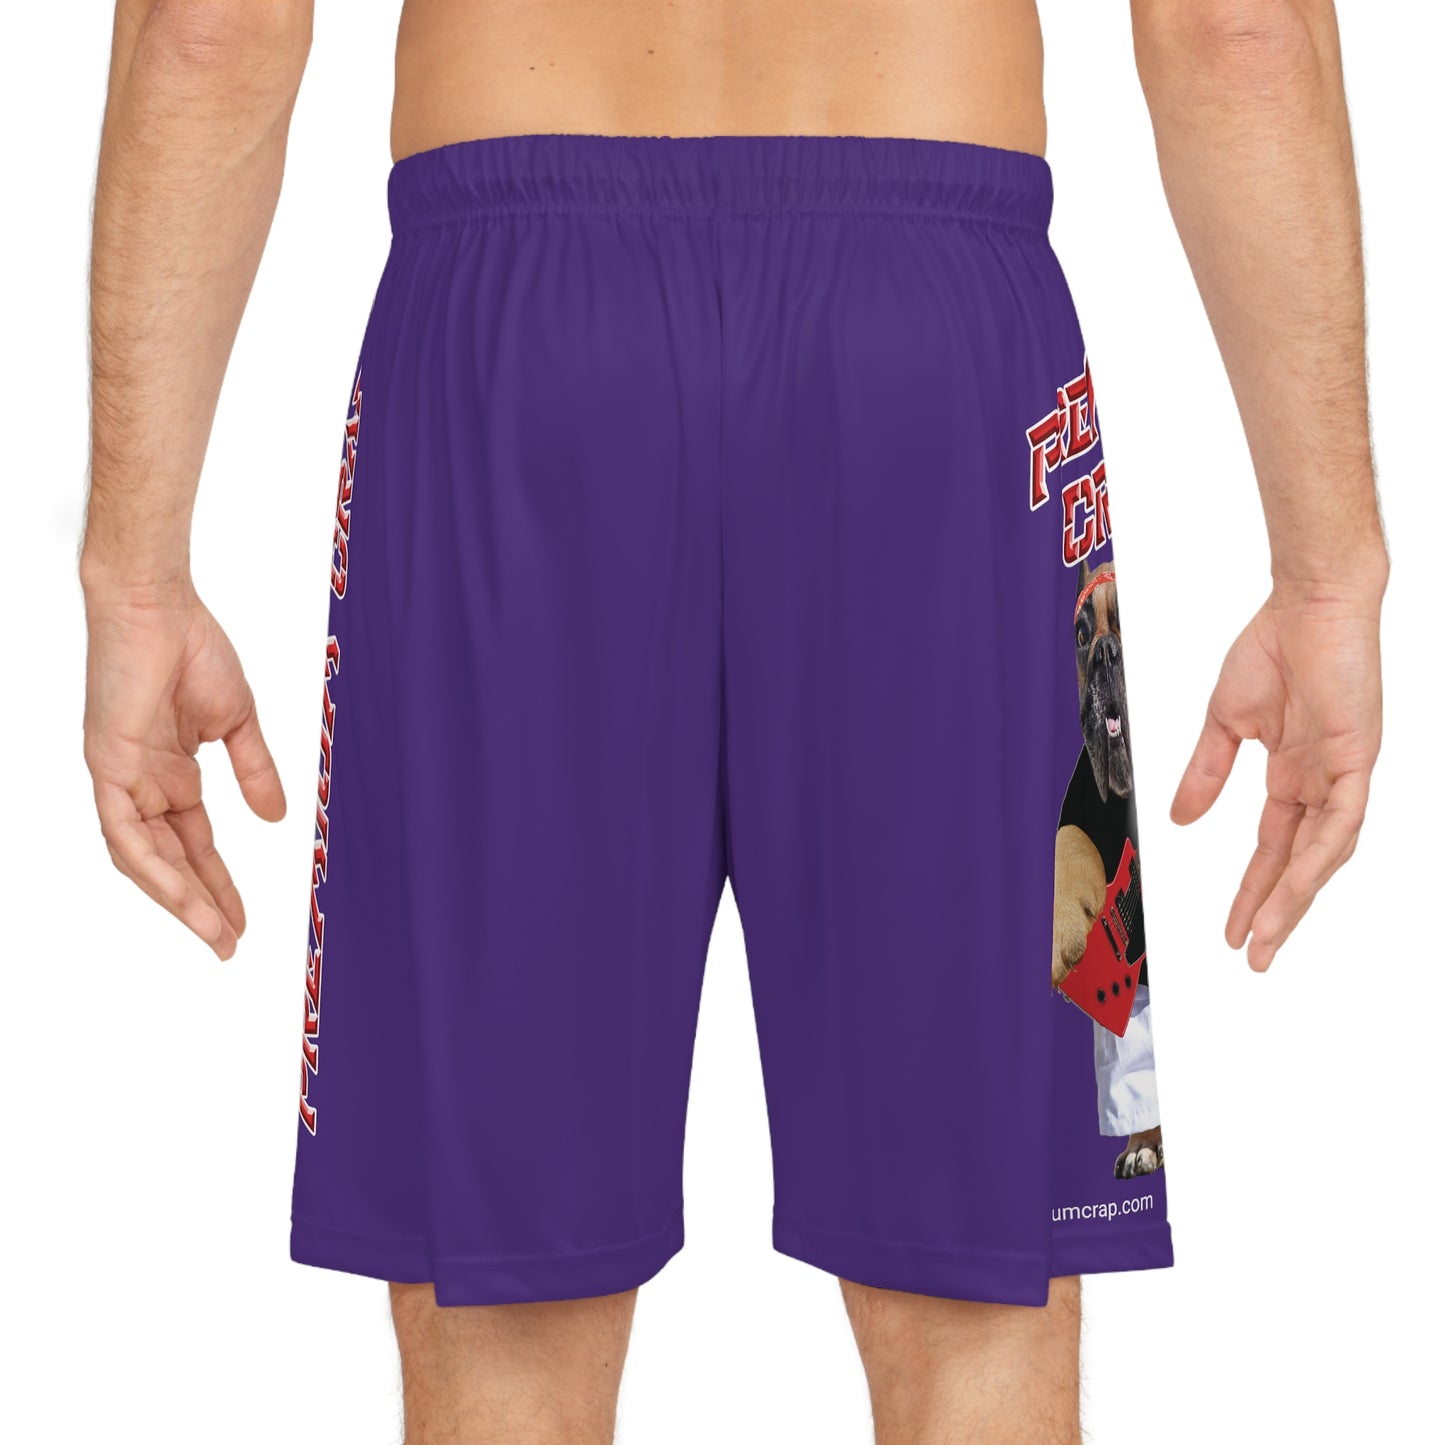 Premium Crap Basketball Shorts - Purple